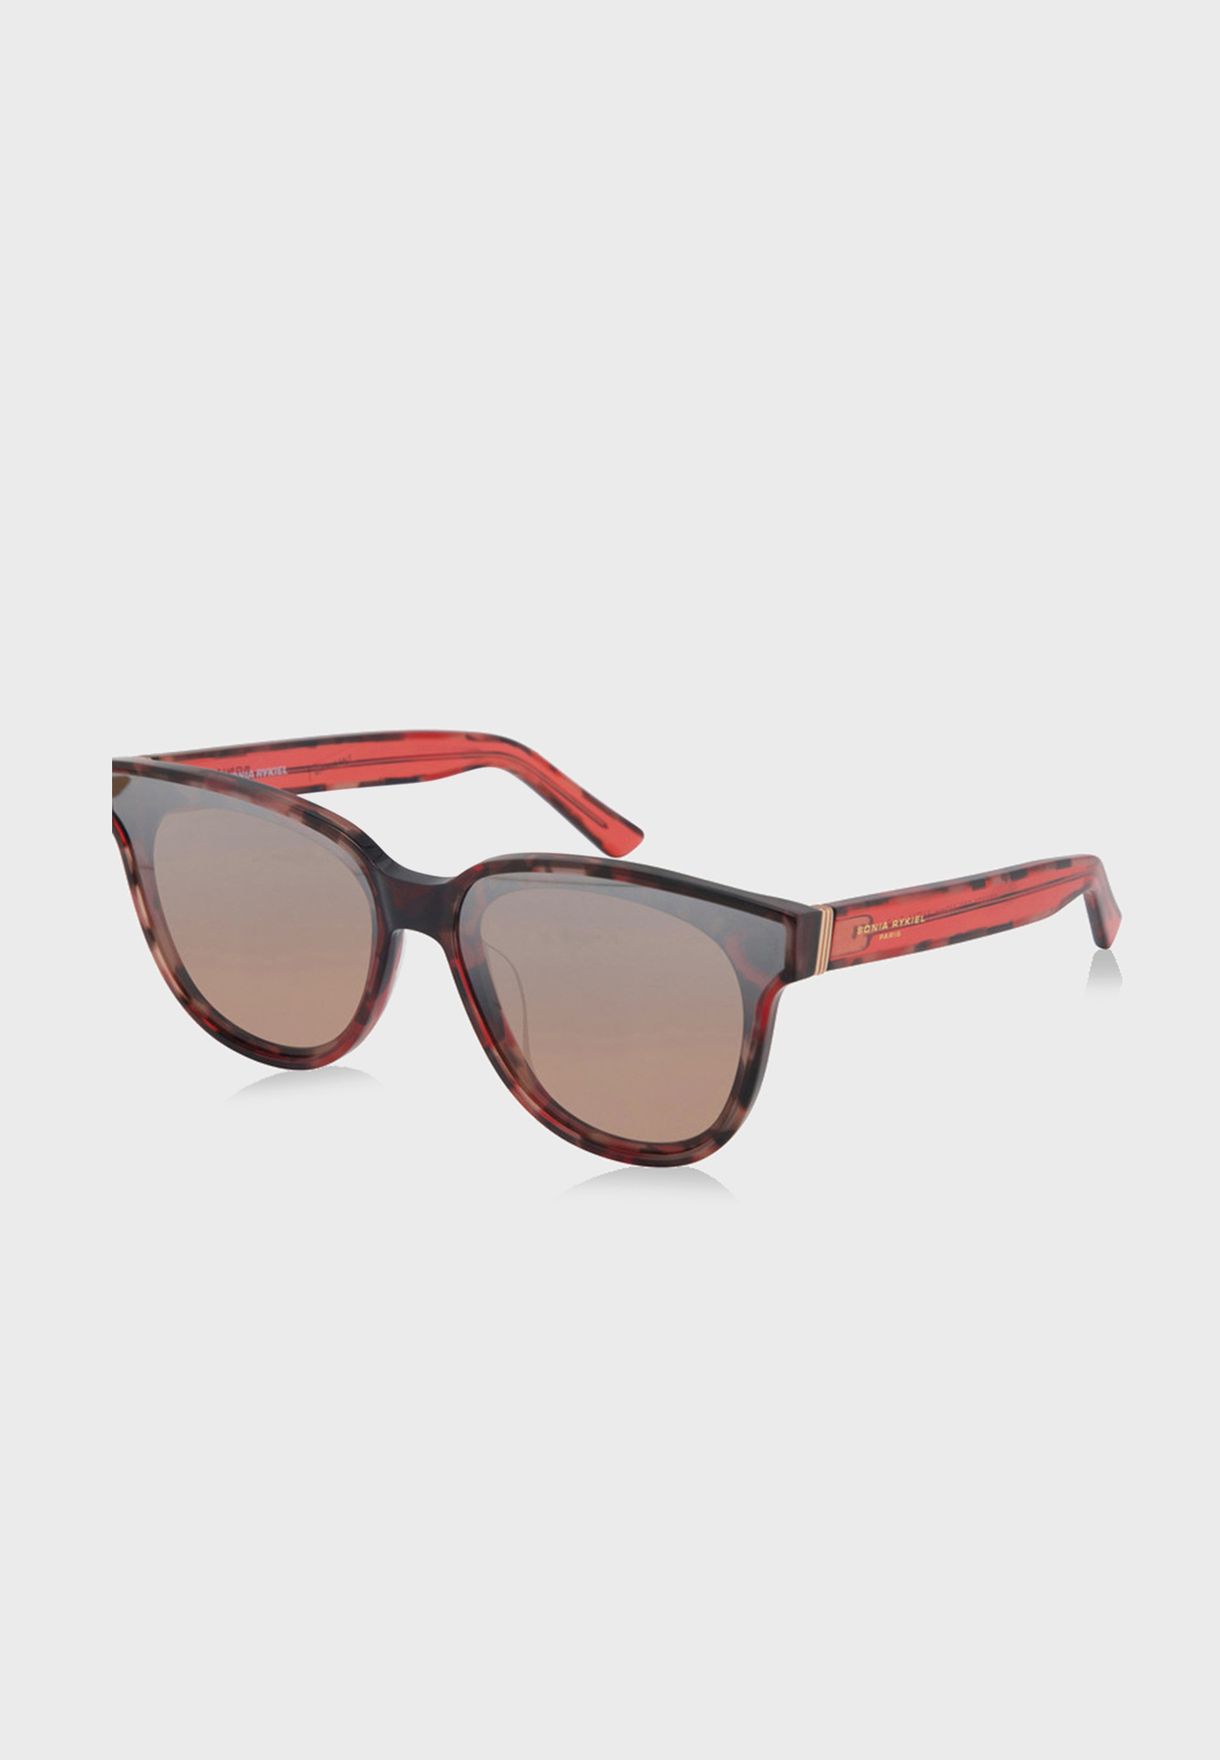 L SR777302 Cateye Sunglasses